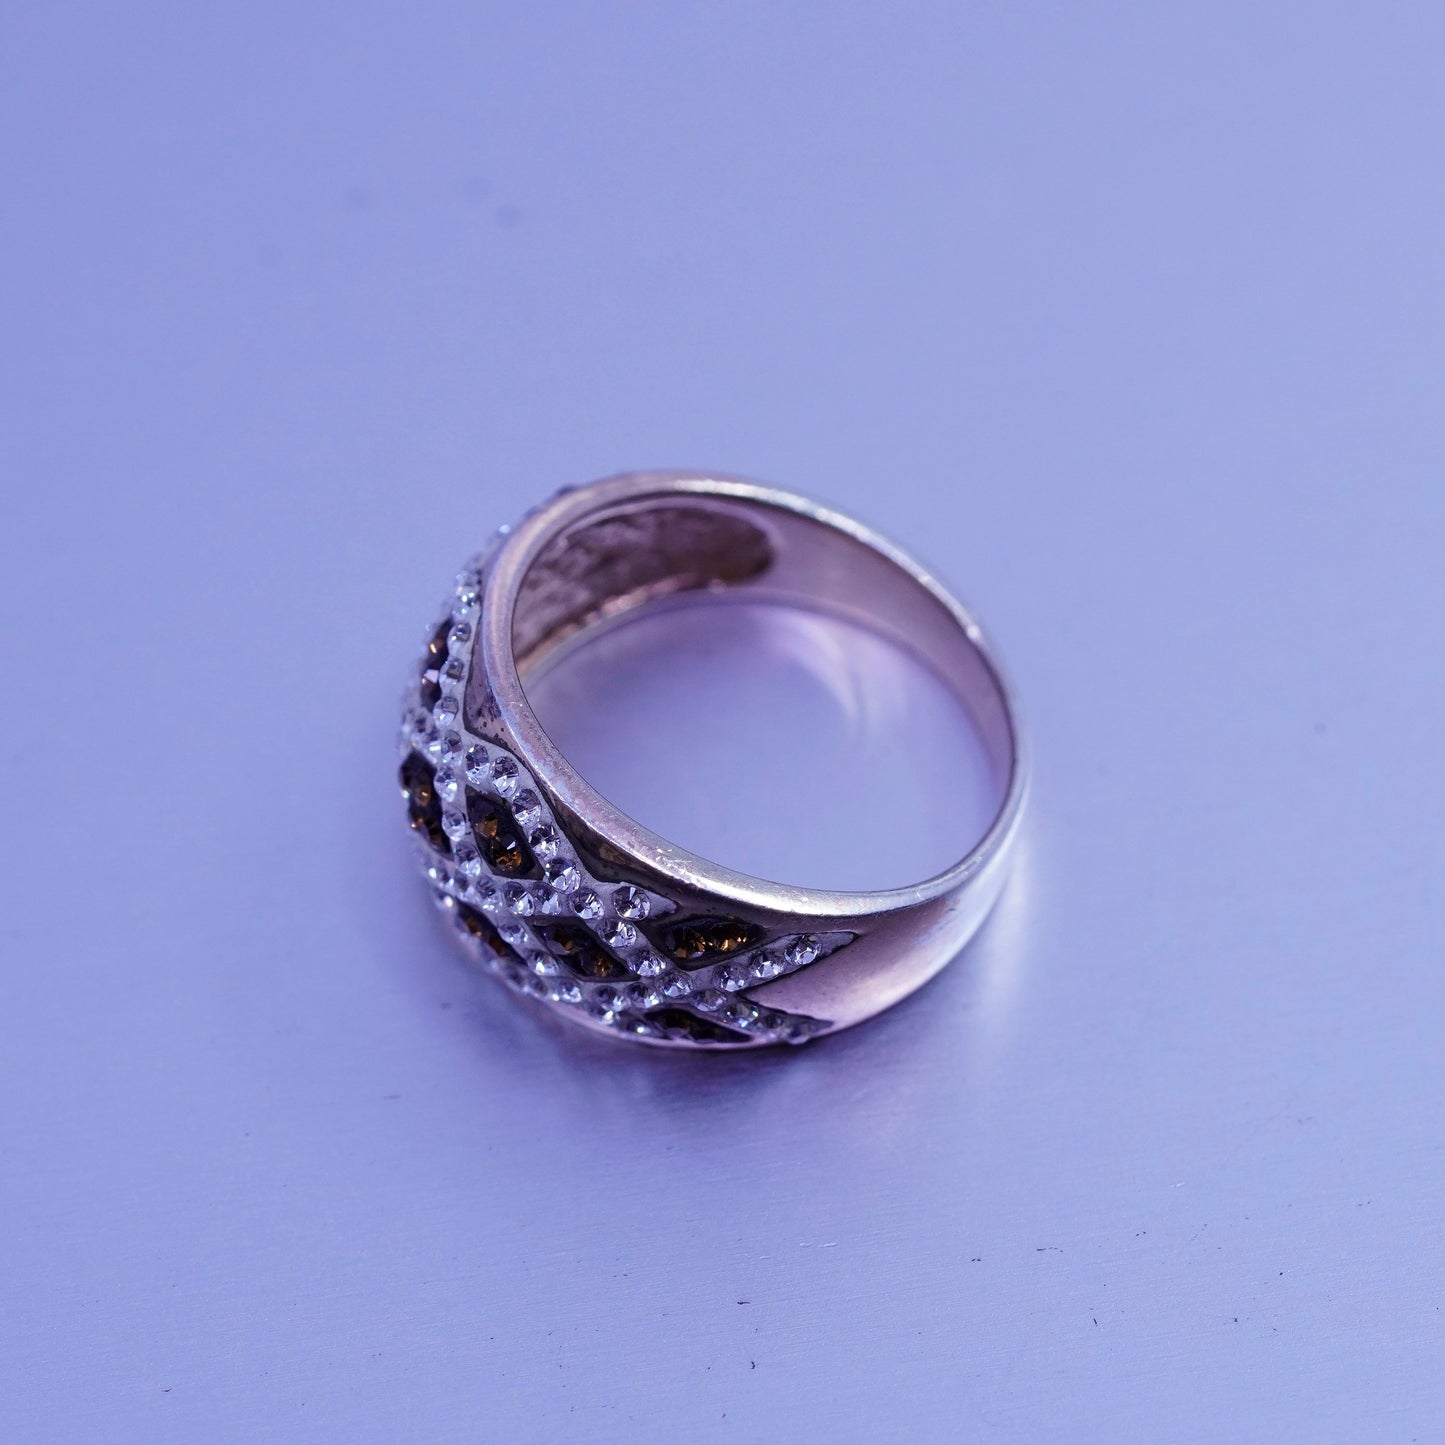 Size 7, vermeil rose gold over Sterling 925 silver band ring orange cluster Cz